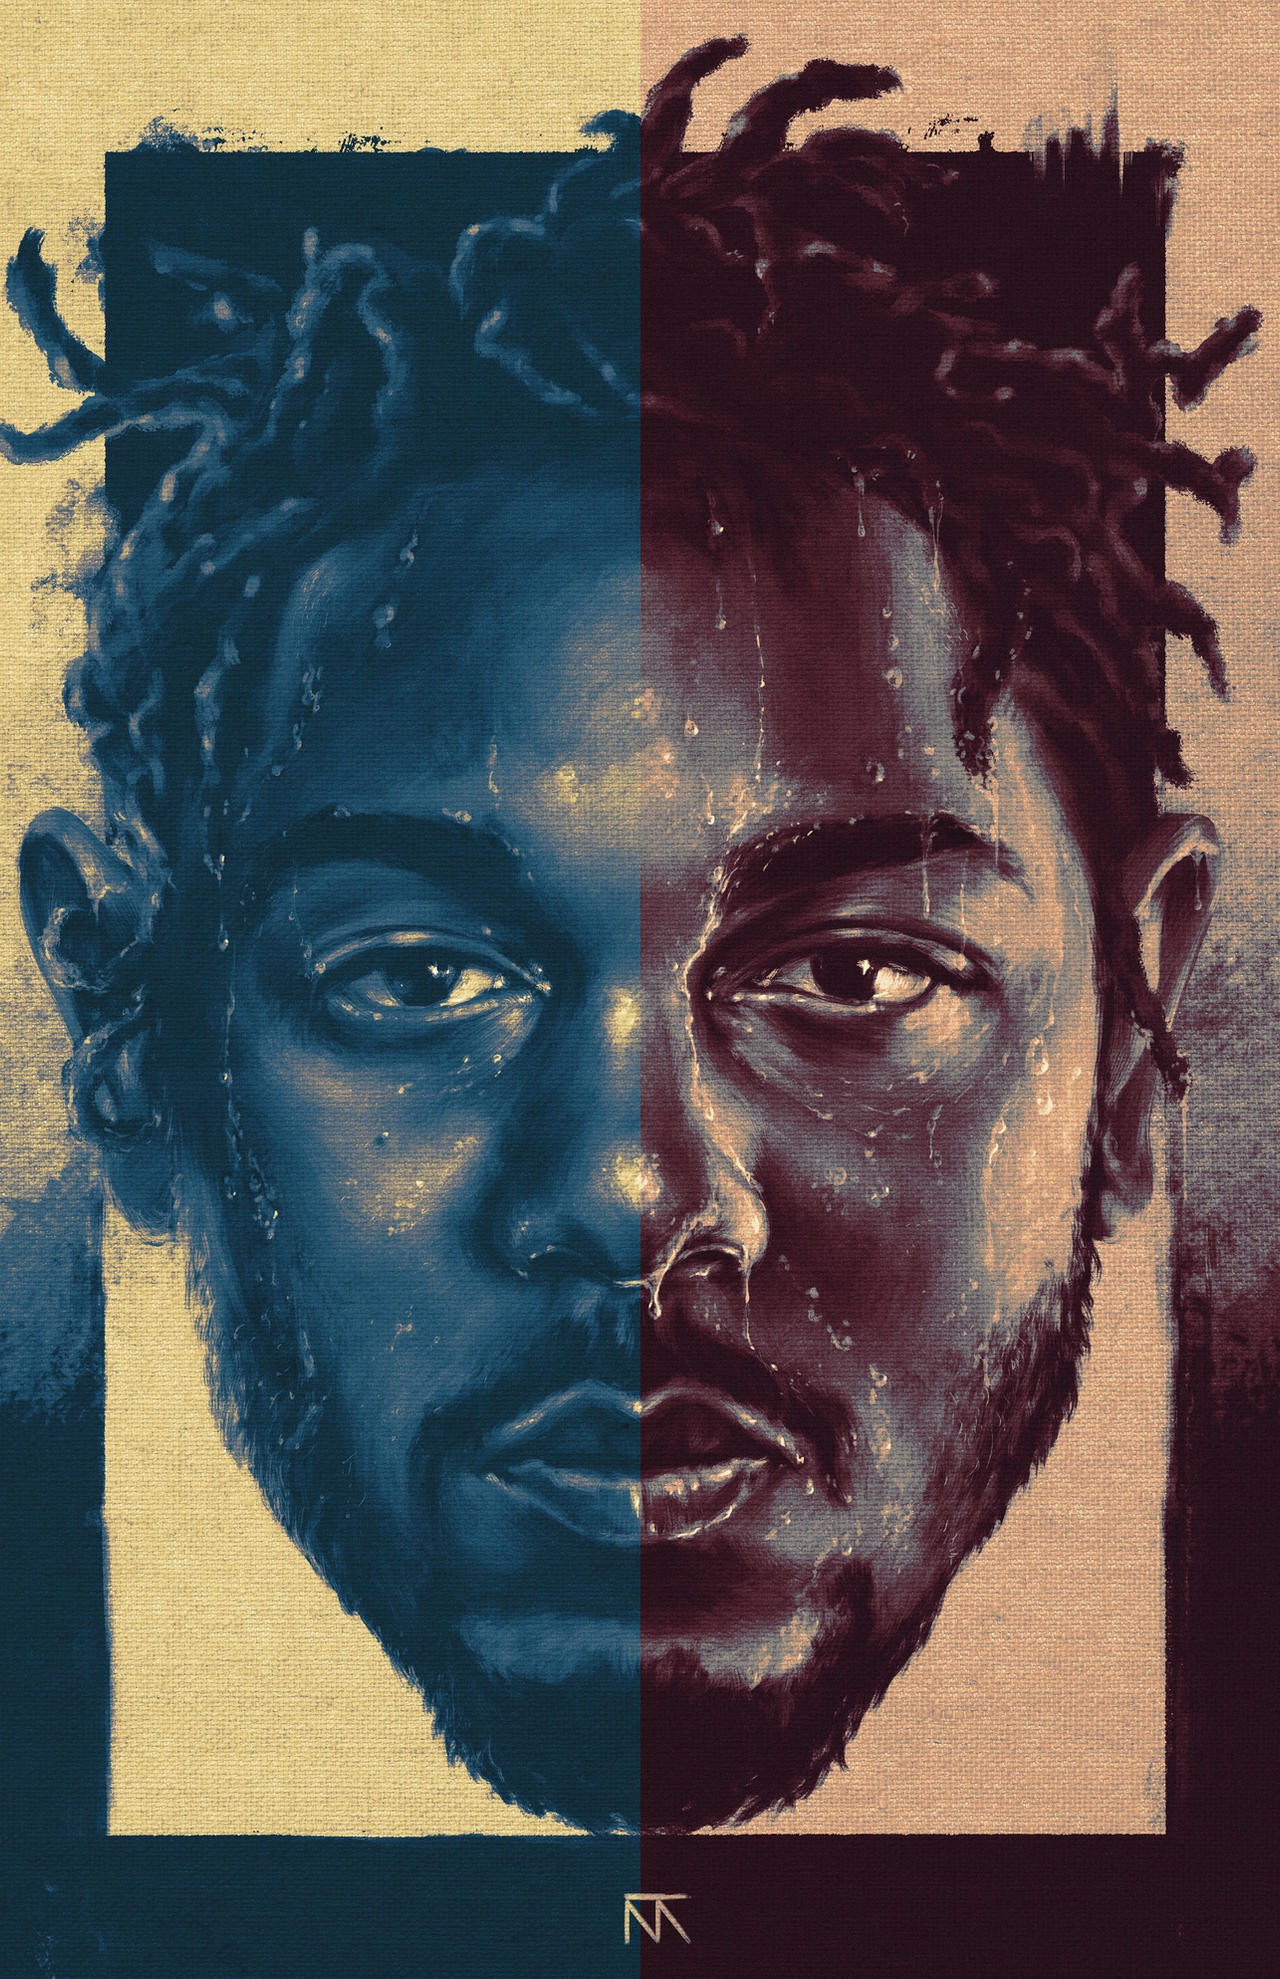 MM: Kendrick Lamar's 'The Blacker The Berry